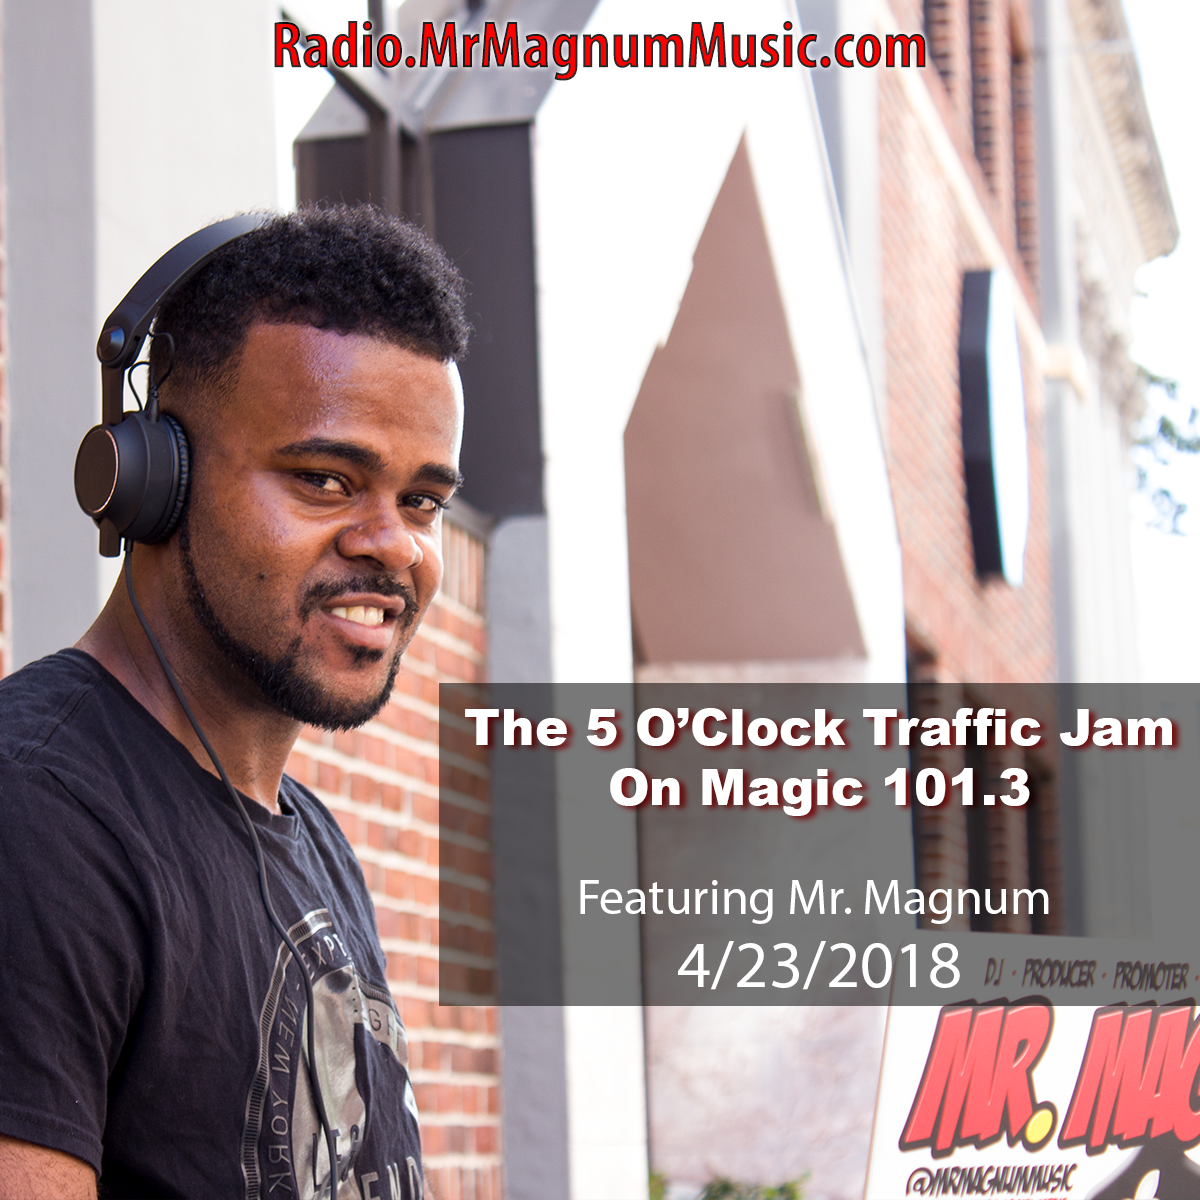 The 5 O'Clock Traffic Jam 20180423 featuring Gainesville's #1 DJ, Mr. Magnum on Magic 101.3